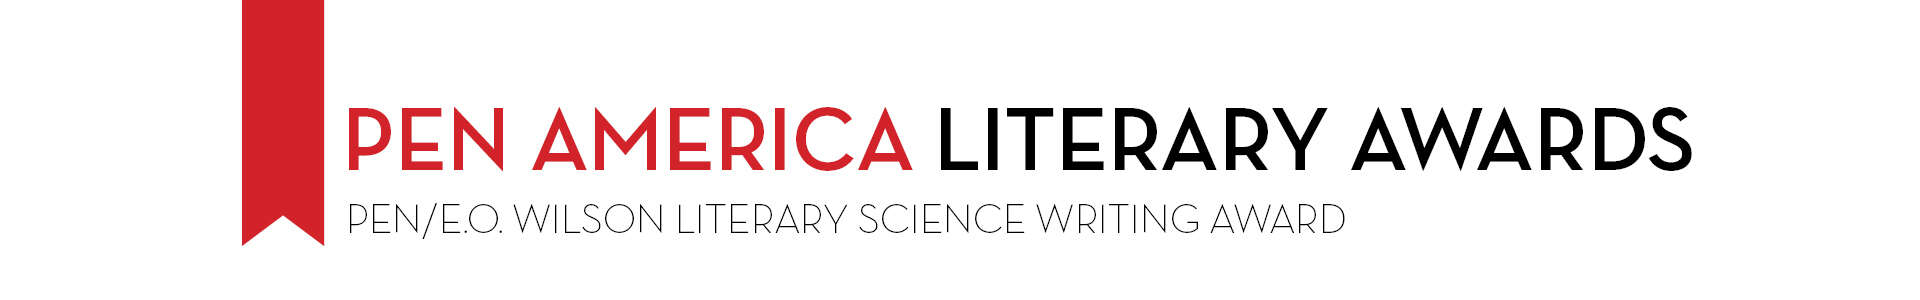 PEN America Literary Awards PEN/E.O. Wilson Literary Science Writing Award